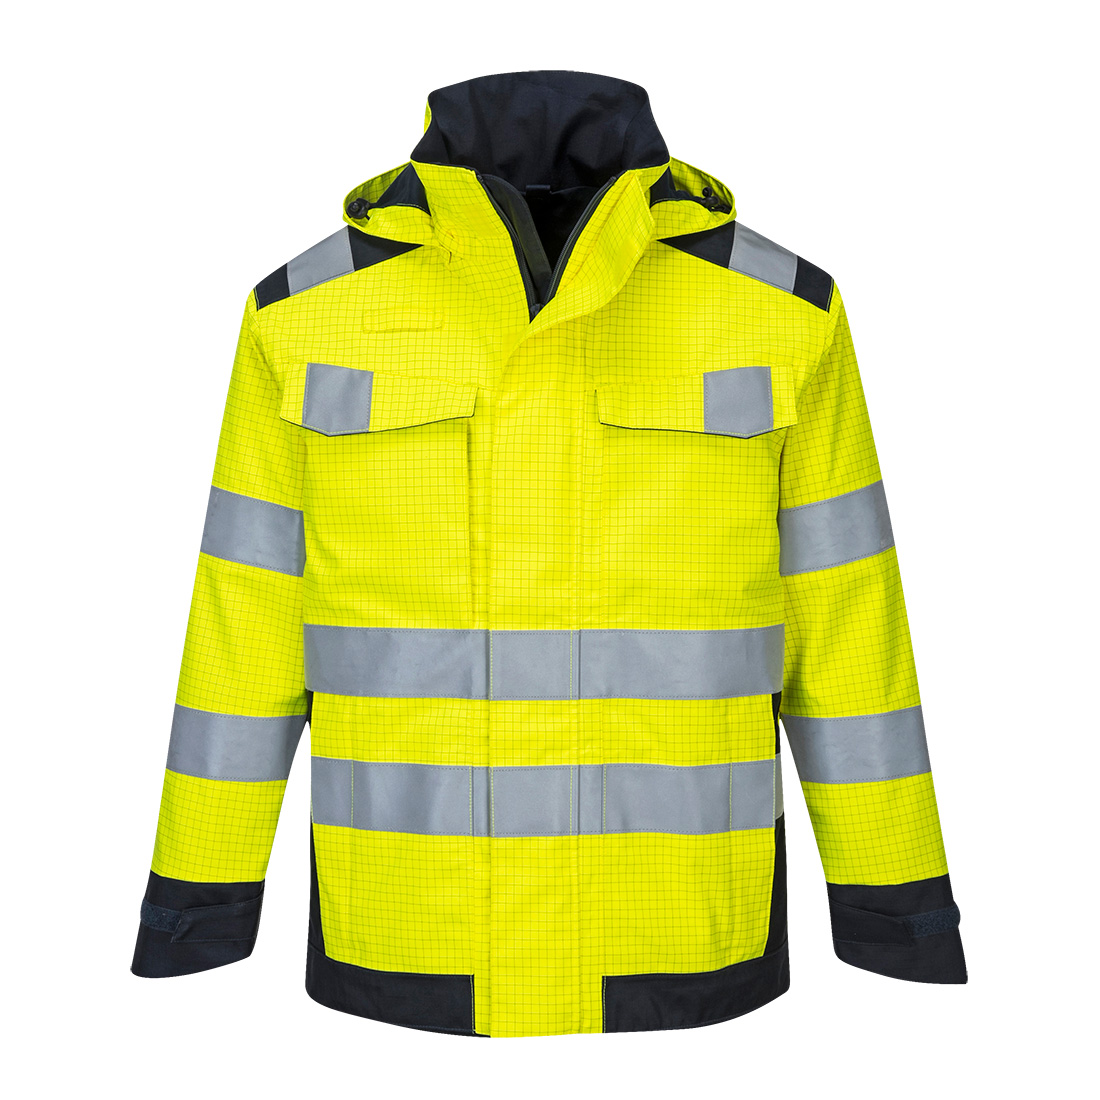 Modaflame Rain Multi Norm Arc Jacket - Yellow/Navy